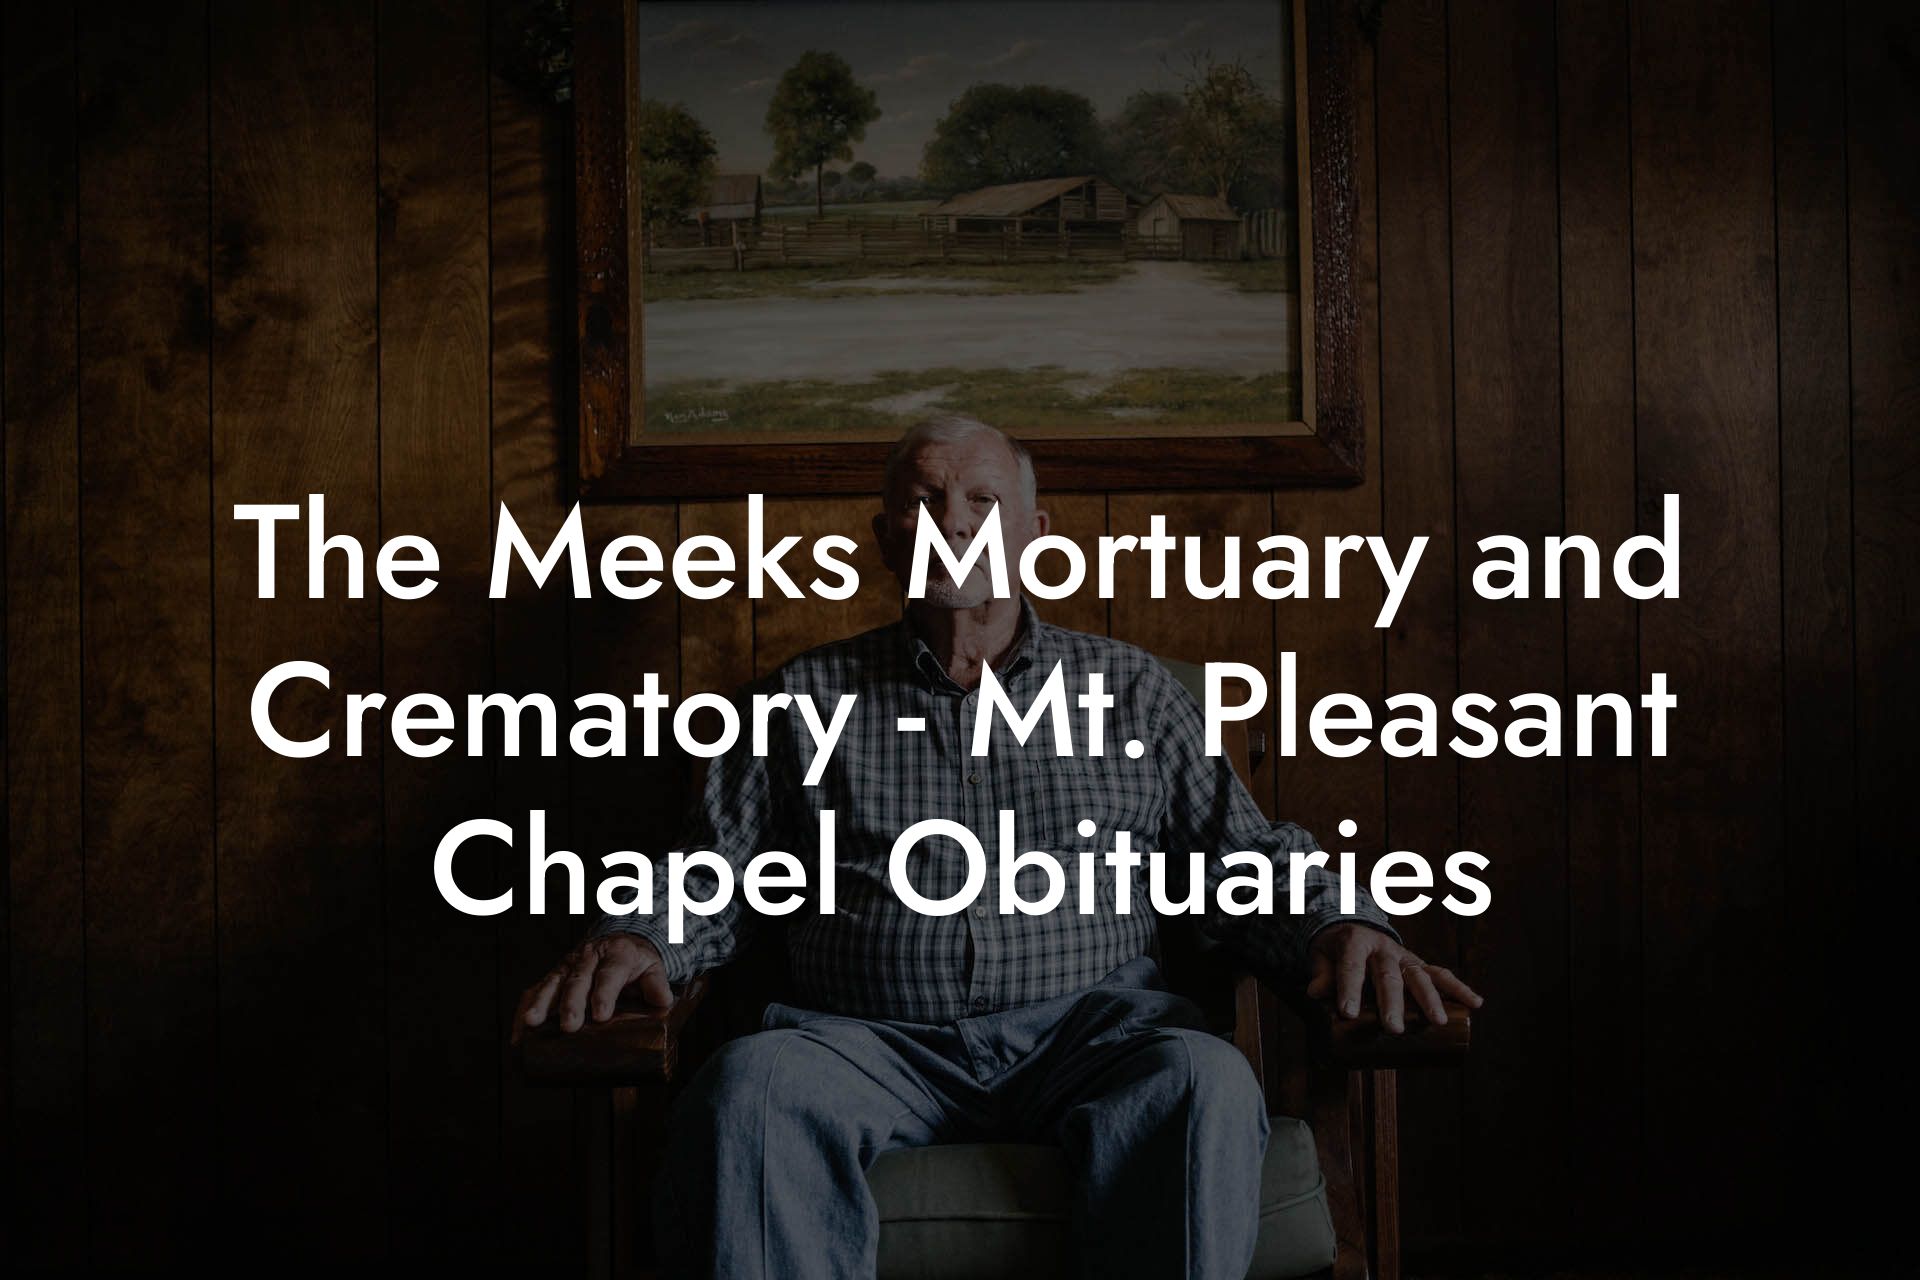 The Meeks Mortuary and Crematory - Mt. Pleasant Chapel Obituaries